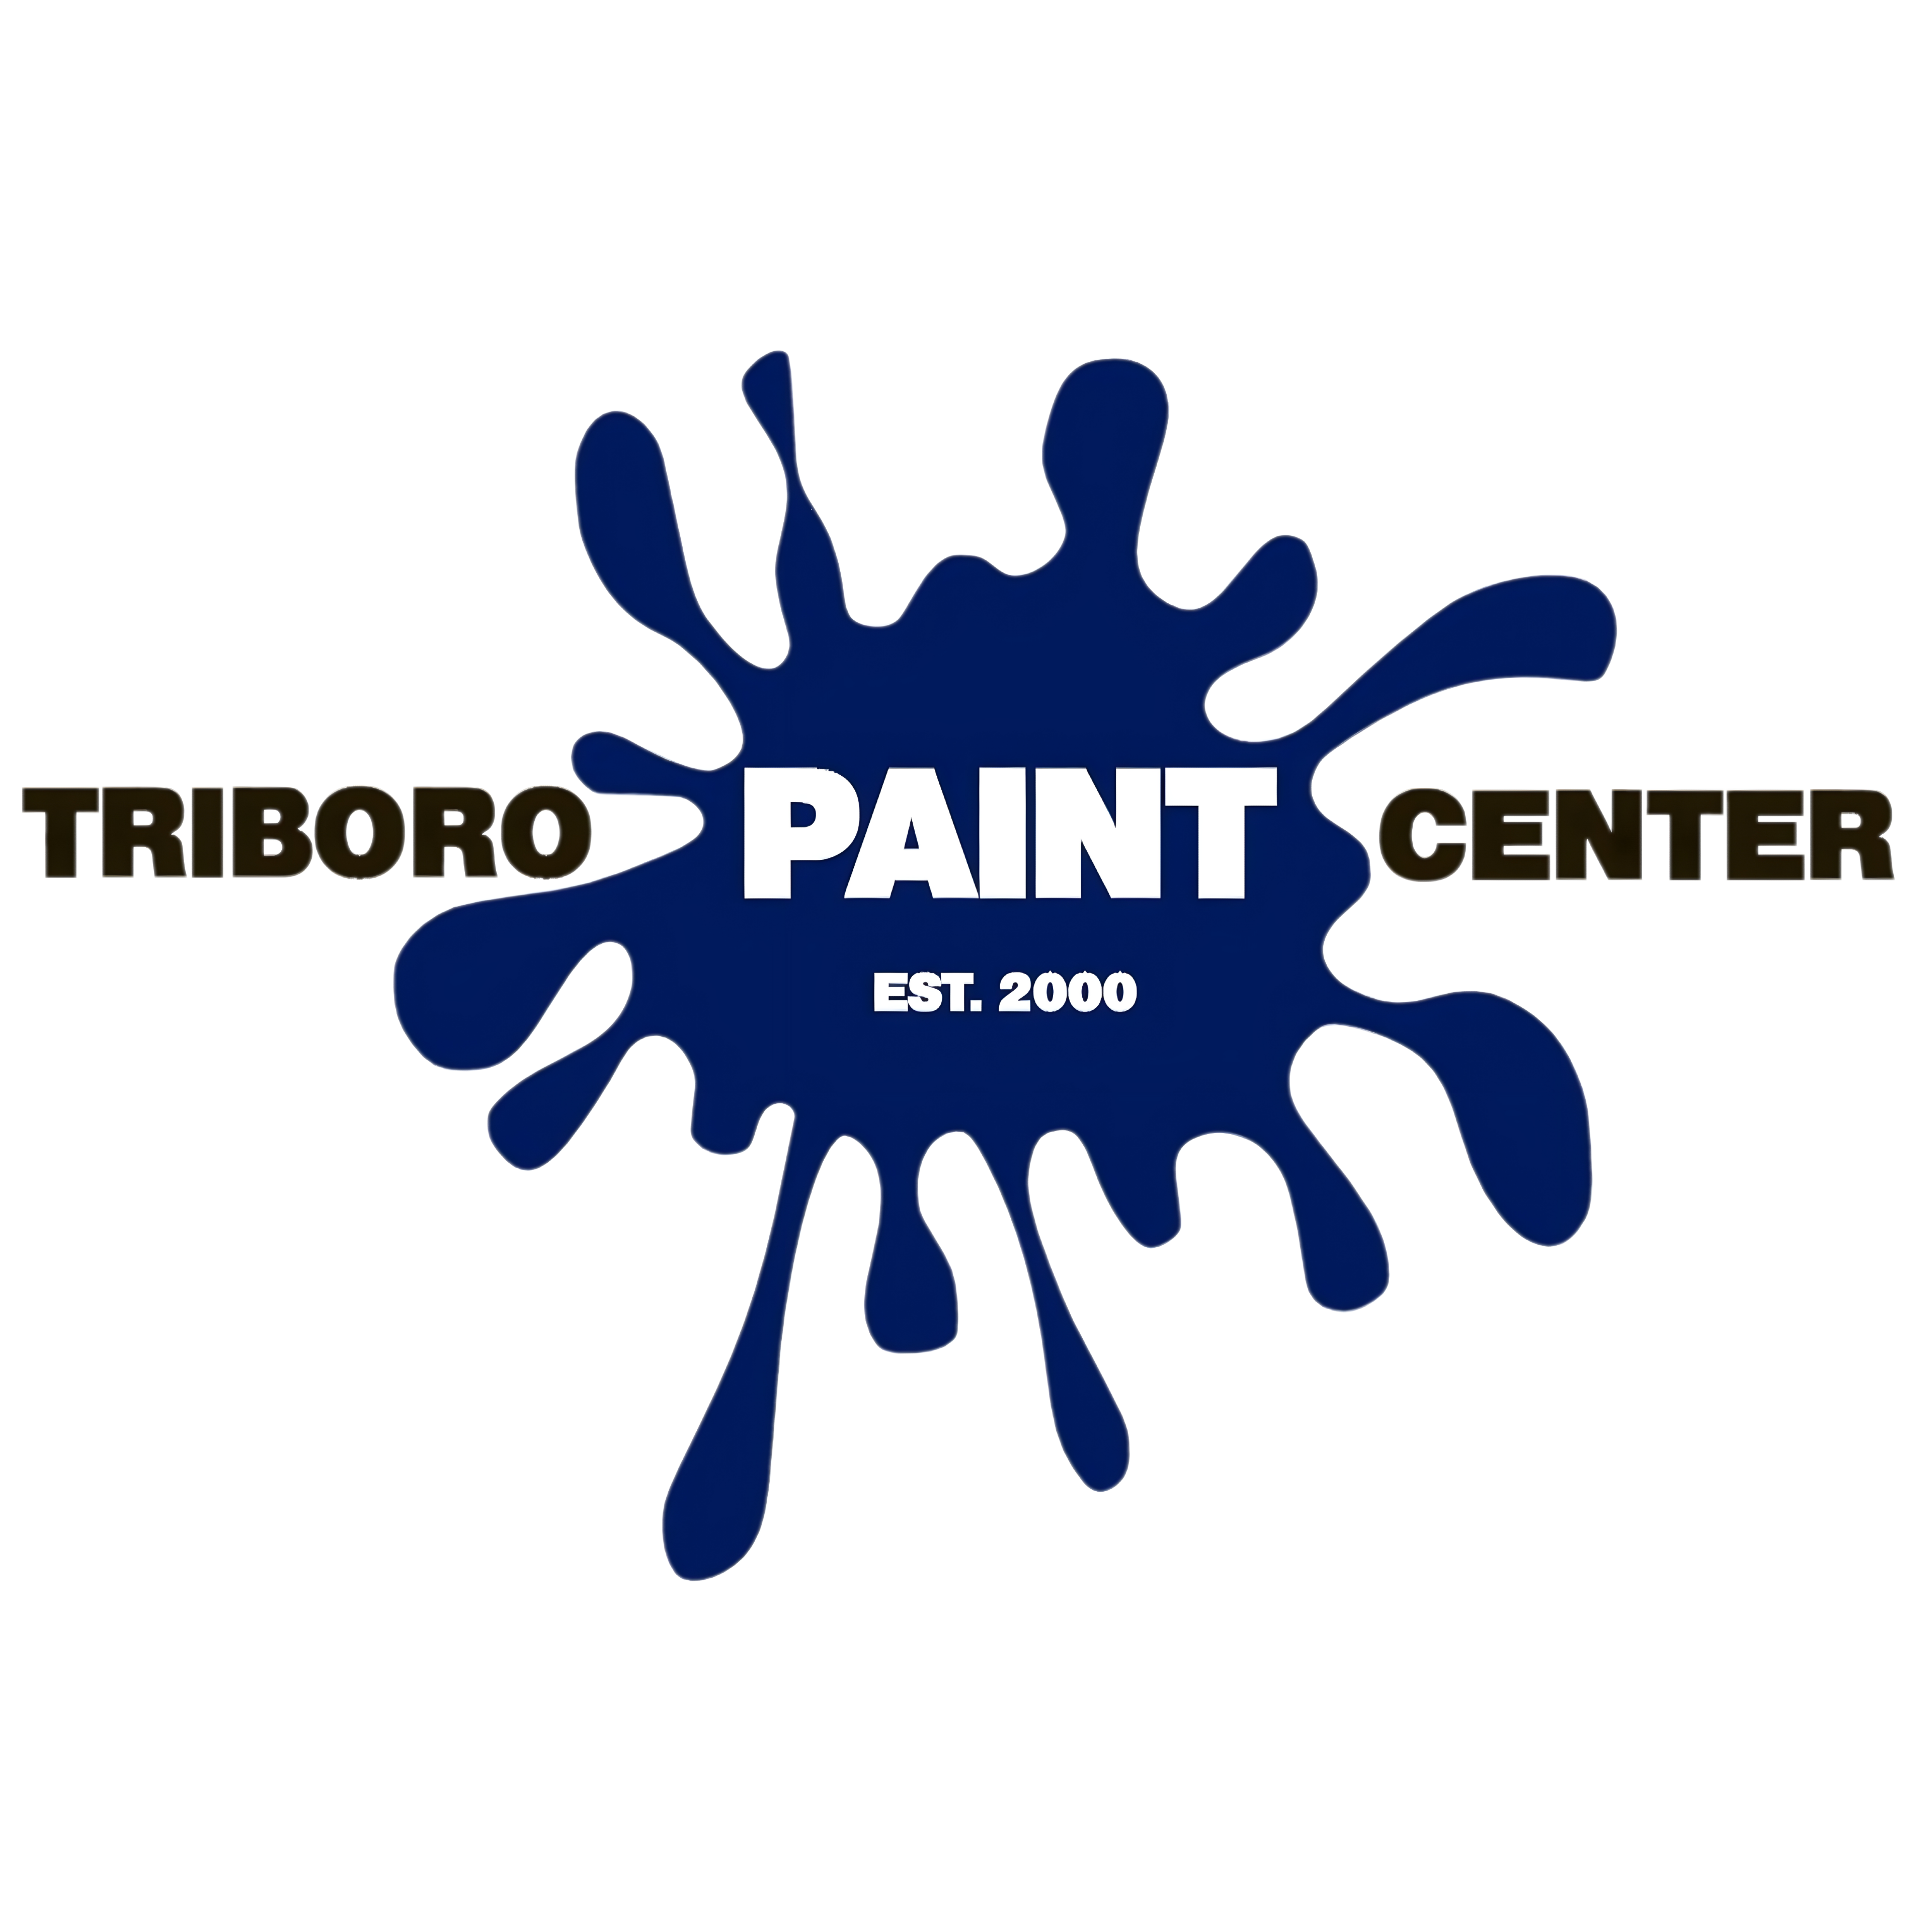 Triboro Paint Center - Warwick, RI 02886 - (401)326-9600 | ShowMeLocal.com